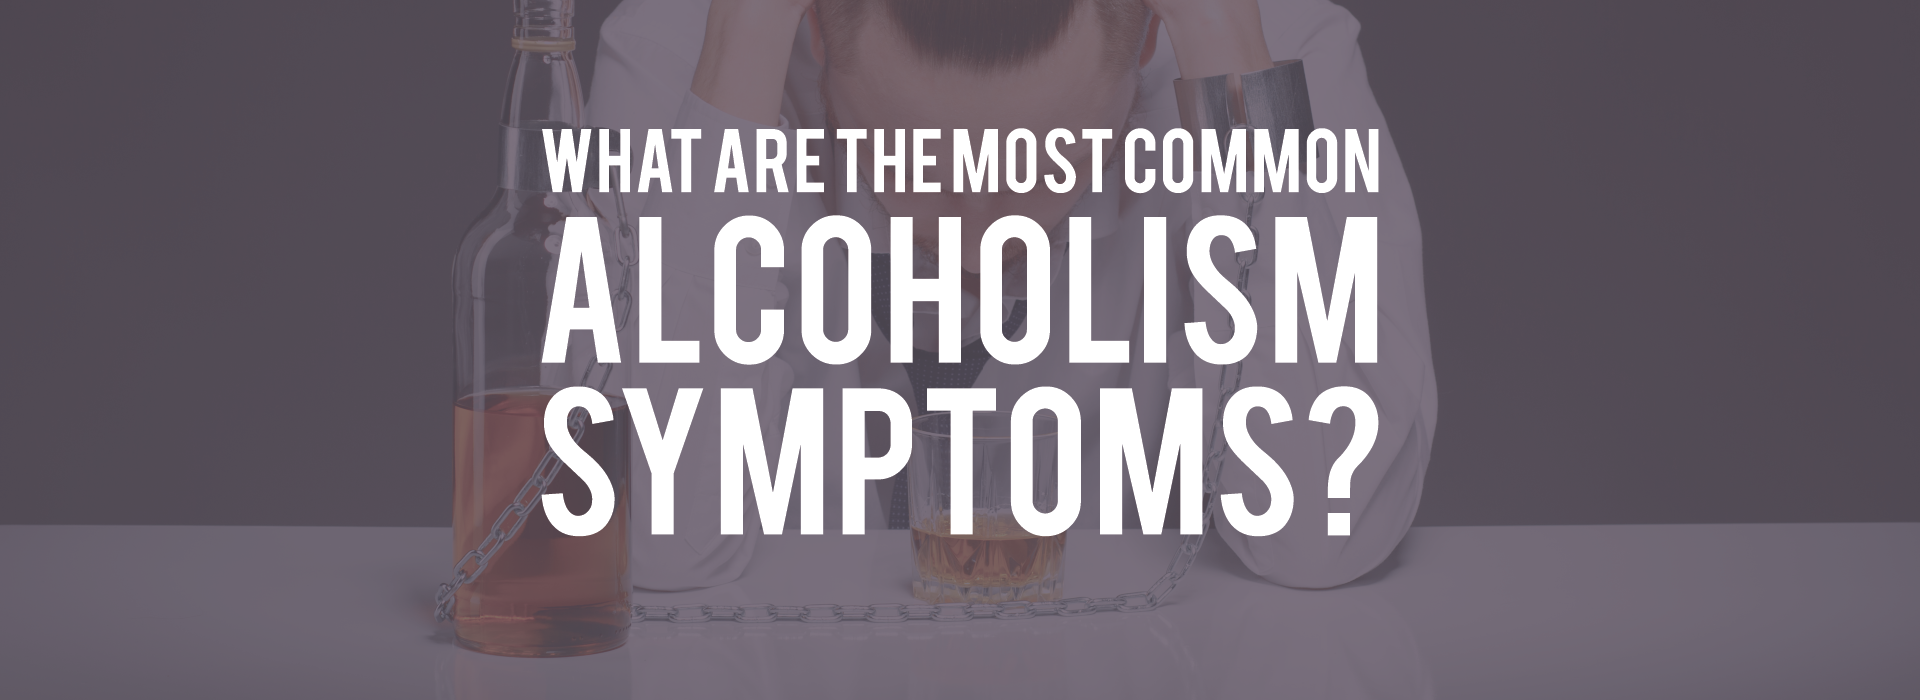 Common Alcoholism Symptoms Header